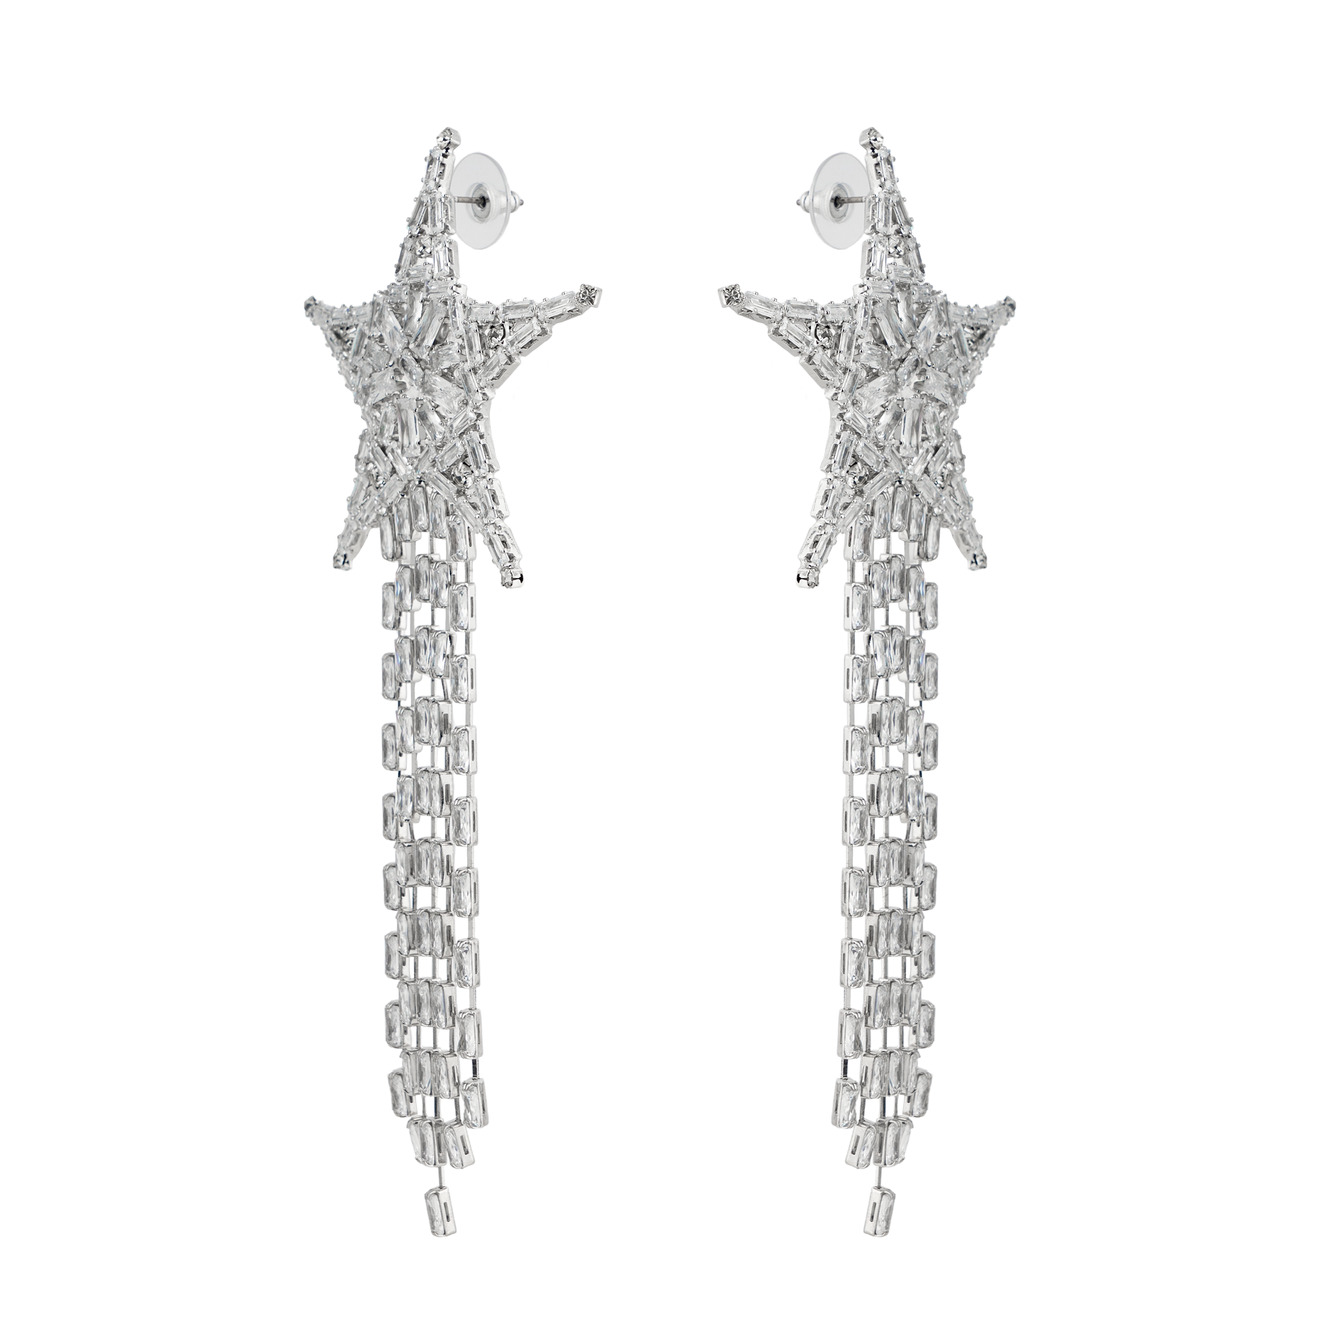 Herald Percy Серебристые бисерные серьги-звезды с кристаллами herald percy серебристые бисерные серьги звезды с кристаллами